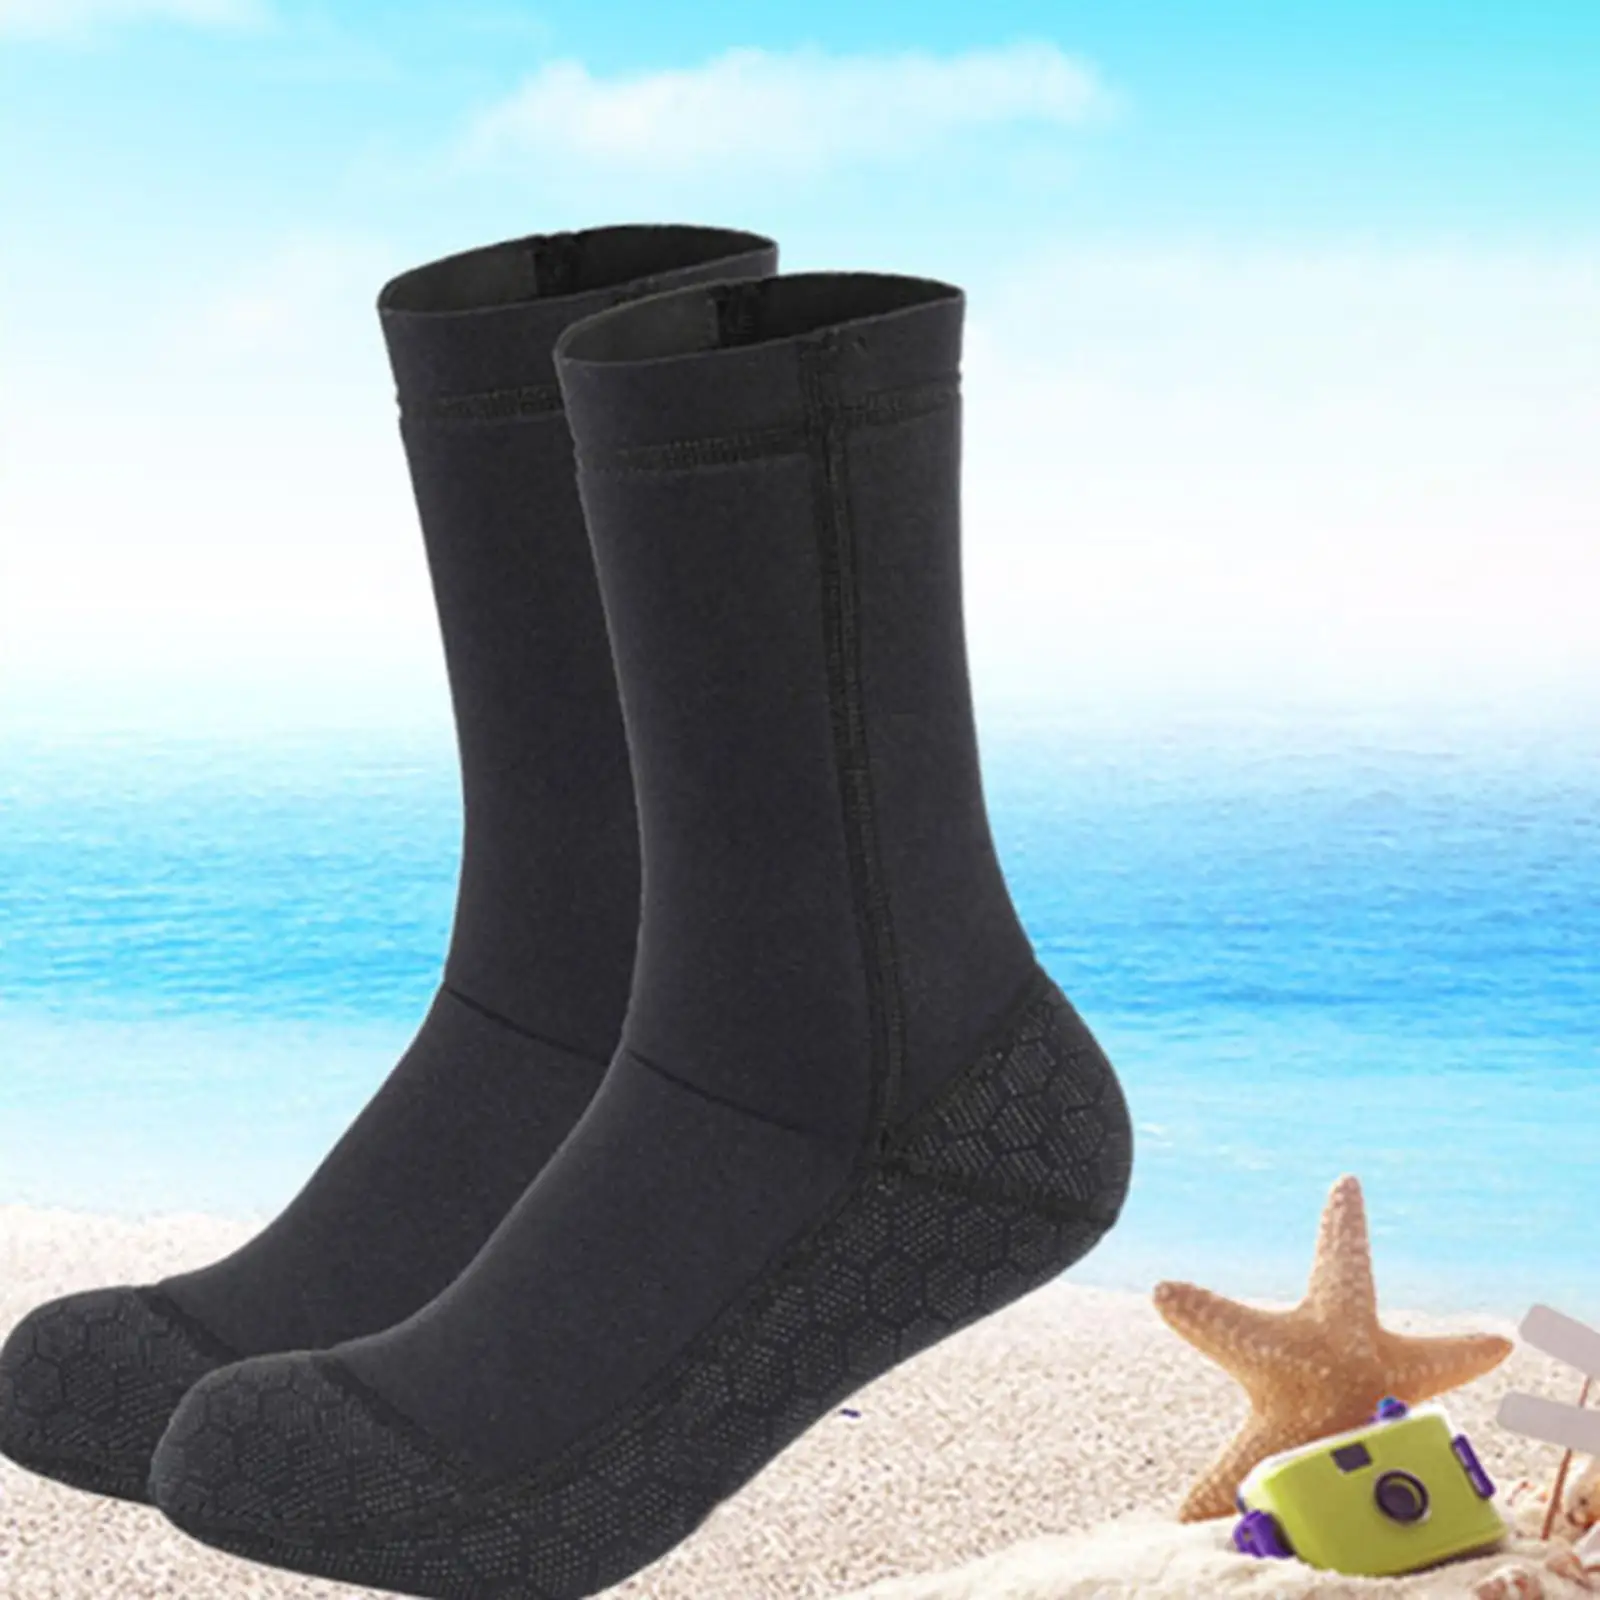 Scuba Diving Socks Water Resistant Warm Water Socks Sand Proof Beach Fin Socks for Swim Snorkeling Surfing Sailing Women Men